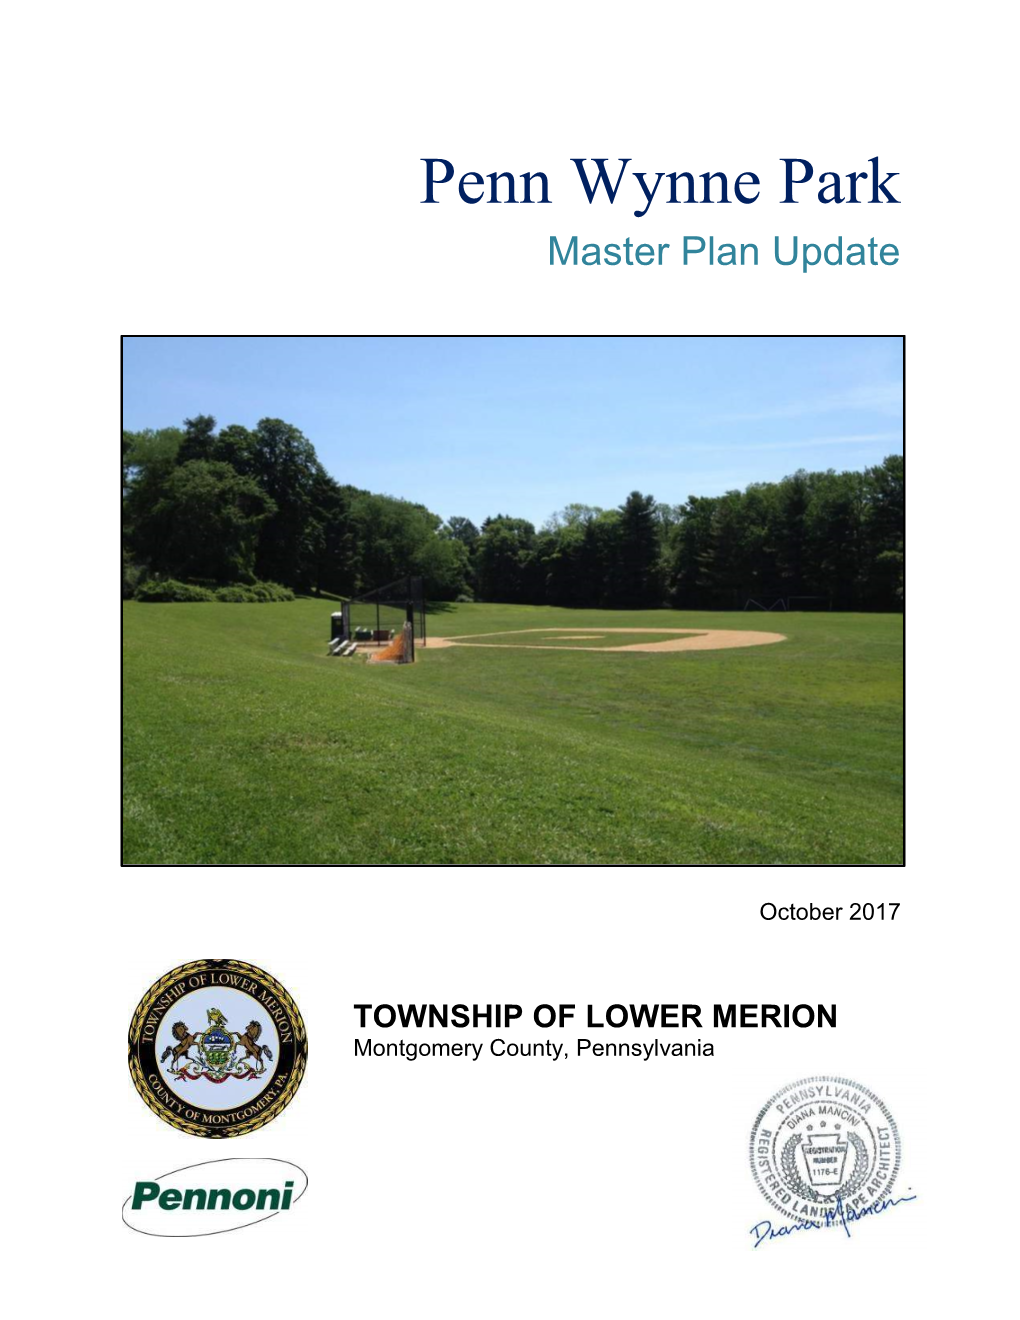 Penn Wynne Park Master Plan Update